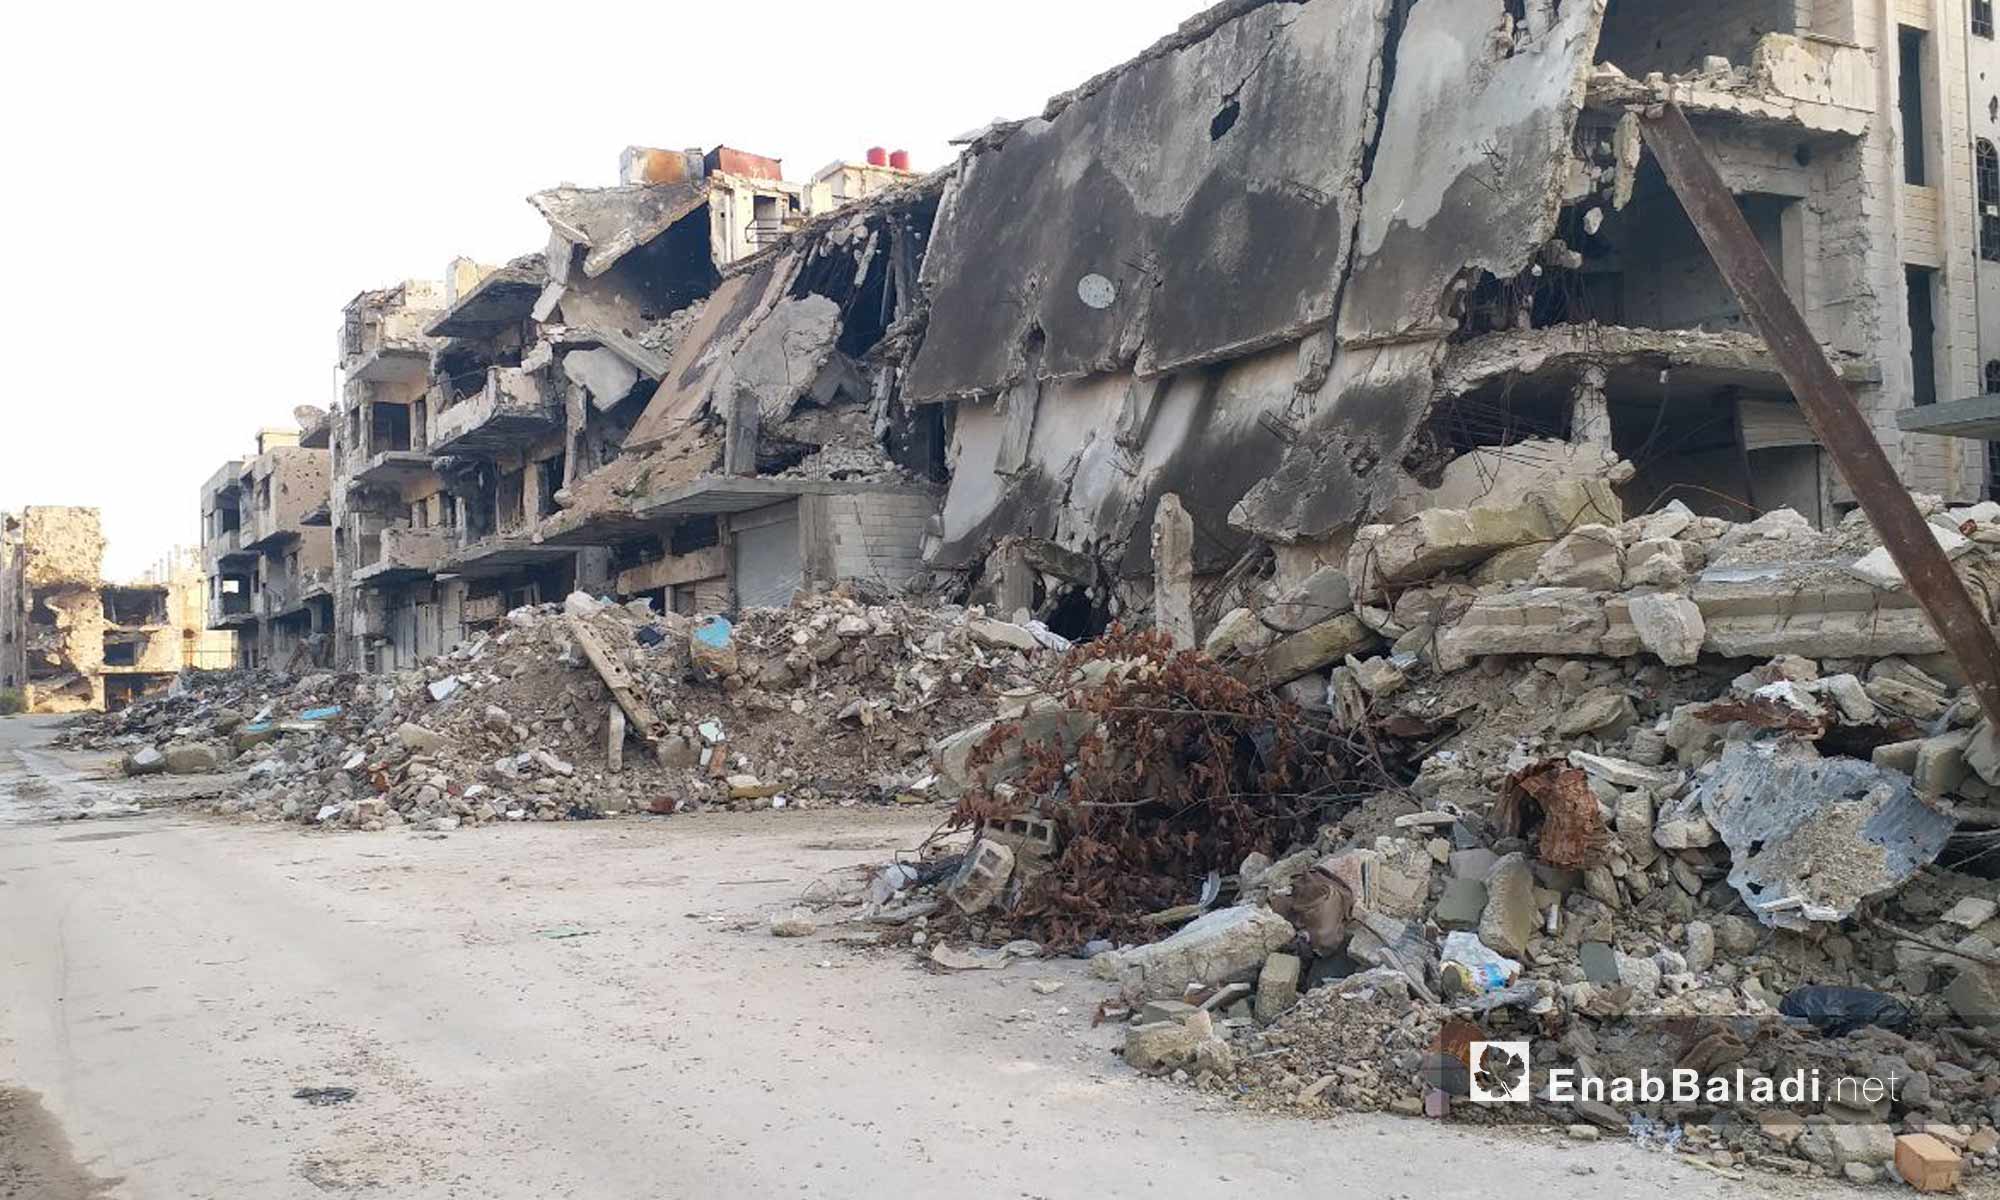 Destroyed buildings in the Kussur neighborhood in the city of Homs - January 24, 2019 (Enab Baladi)